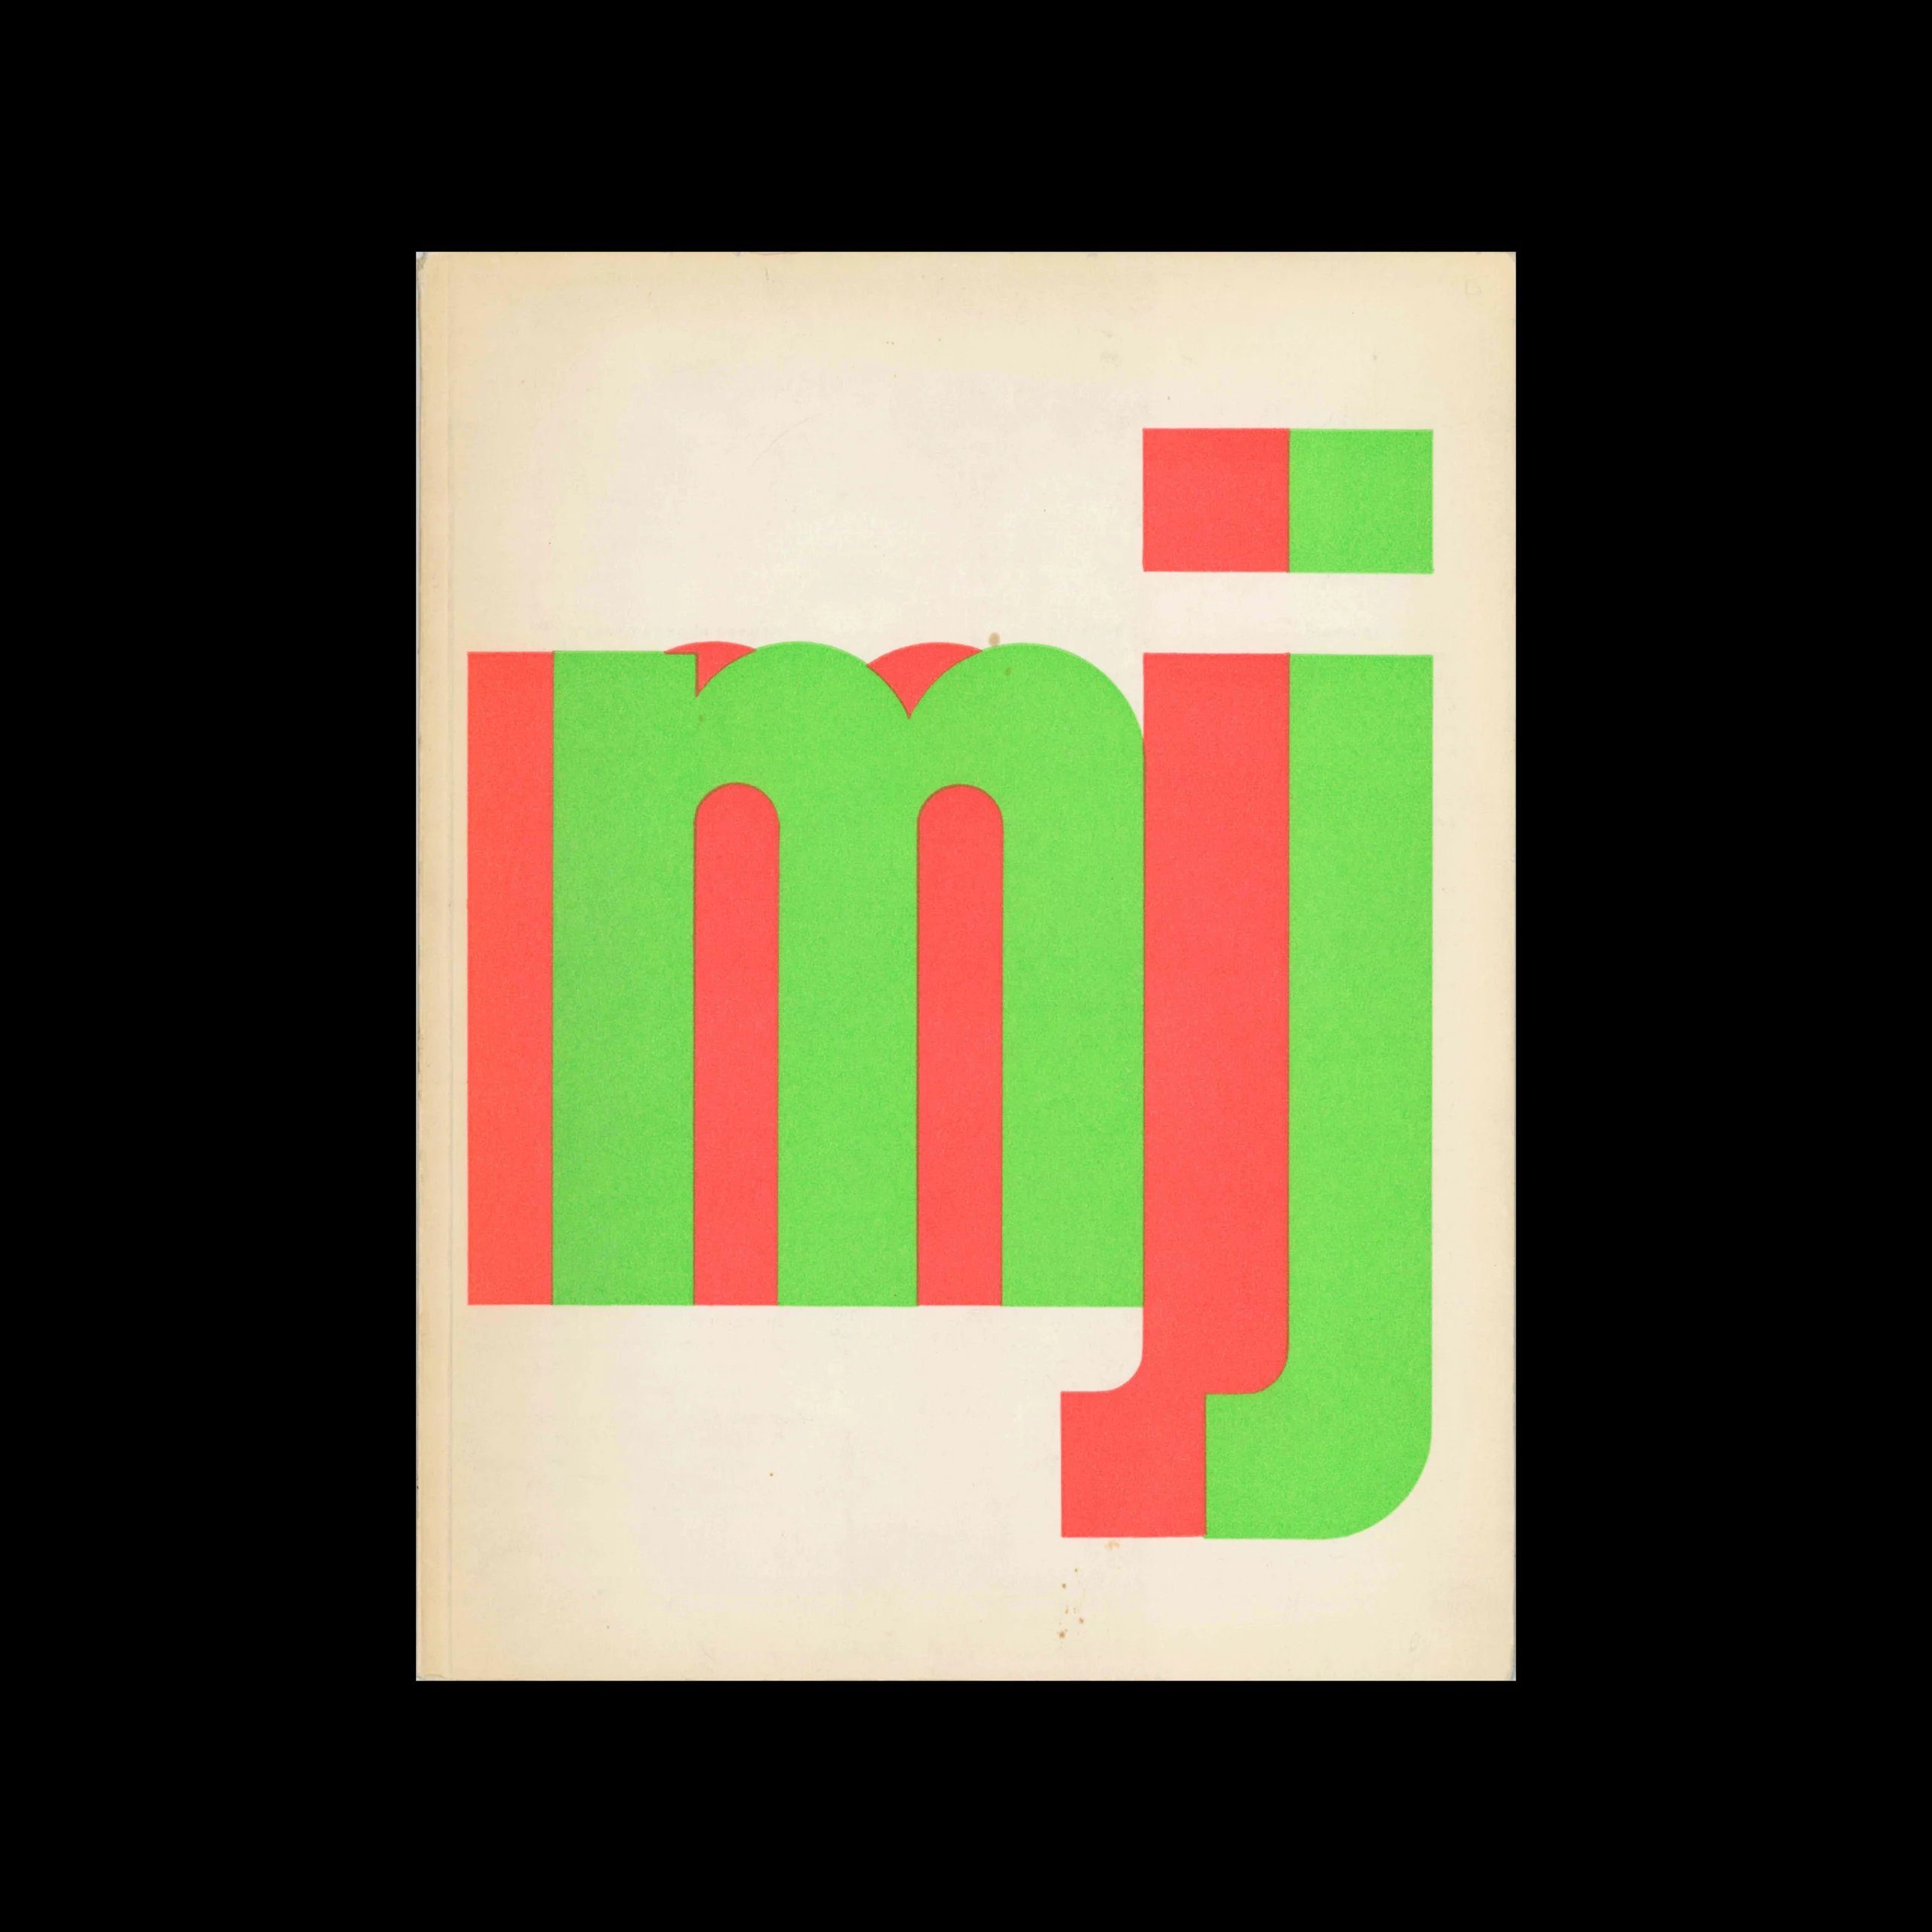 Museumjournaal, Serie 12 no 1, 1967. Designed by Jurriaan Schrofer